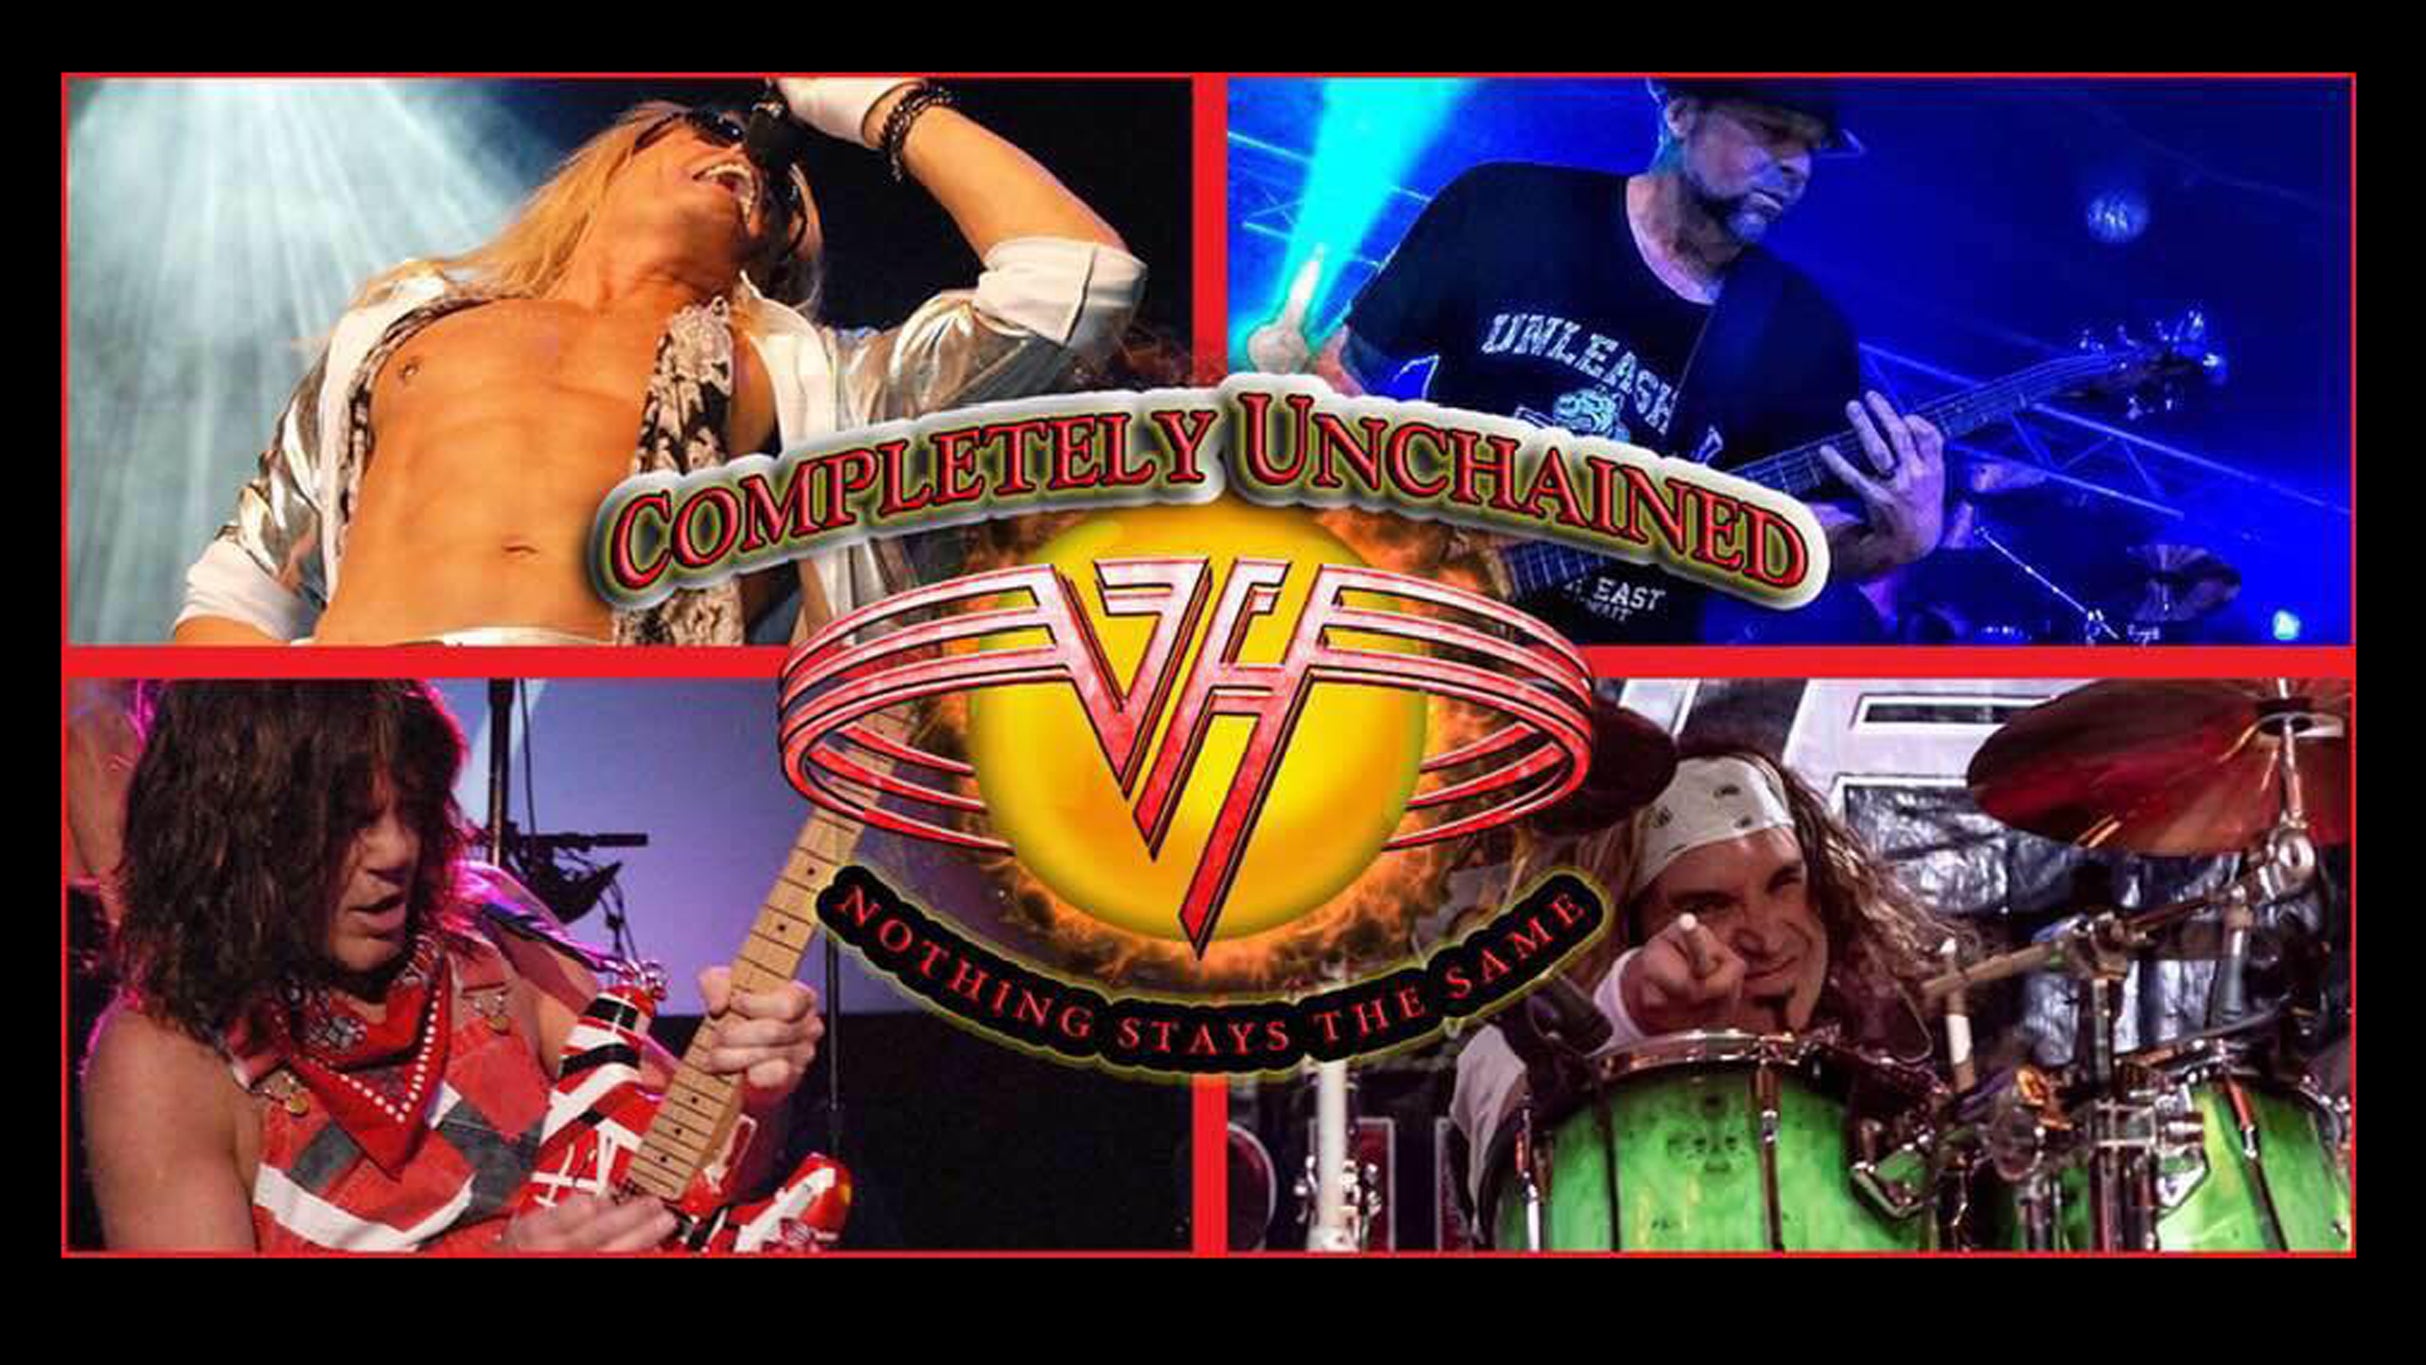 Completely Unchained - The Ultimate Van Halen Production presale information on freepresalepasswords.com